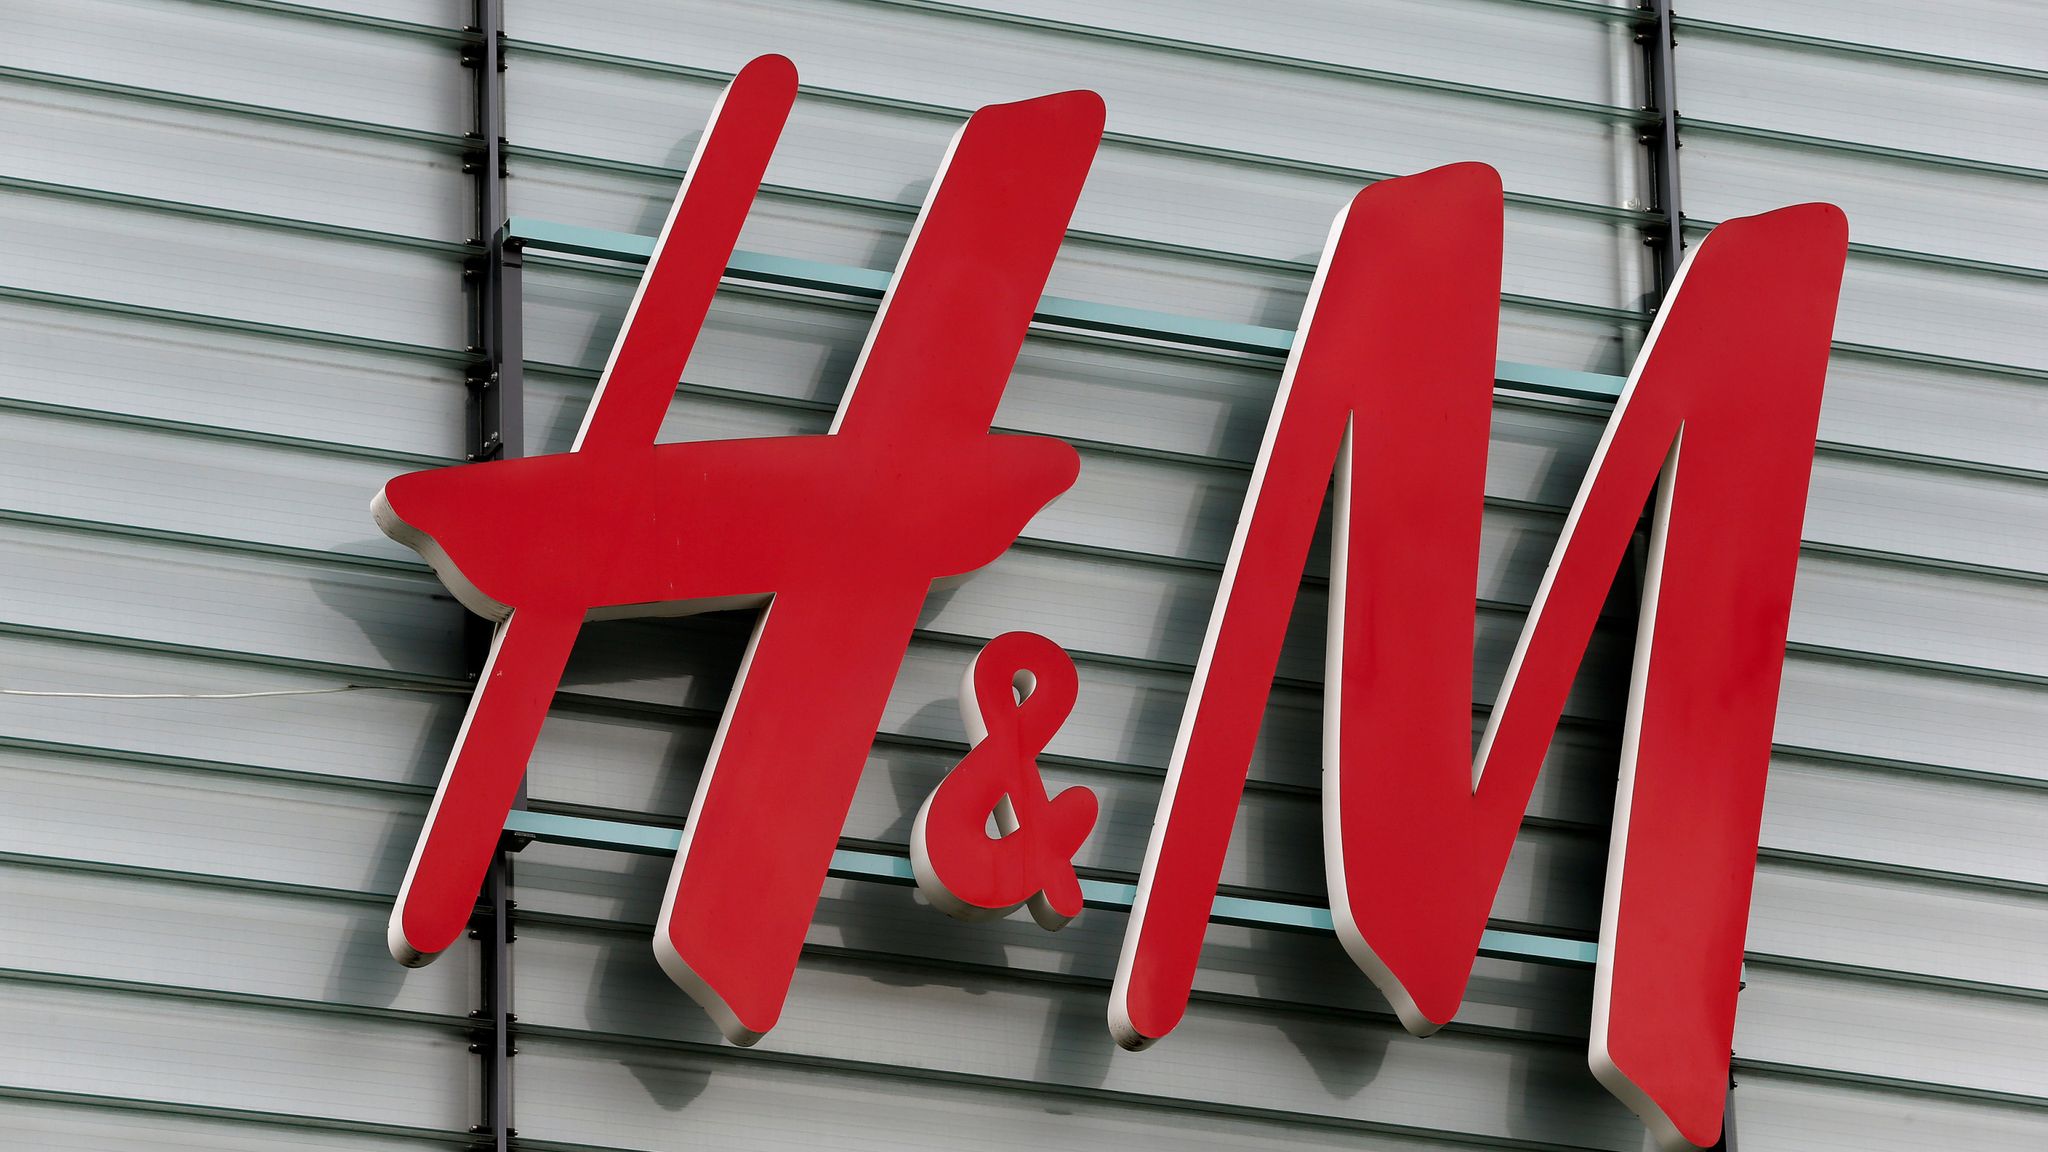 H&M makes bigger clothing sizes following customer complaints | UK News ...